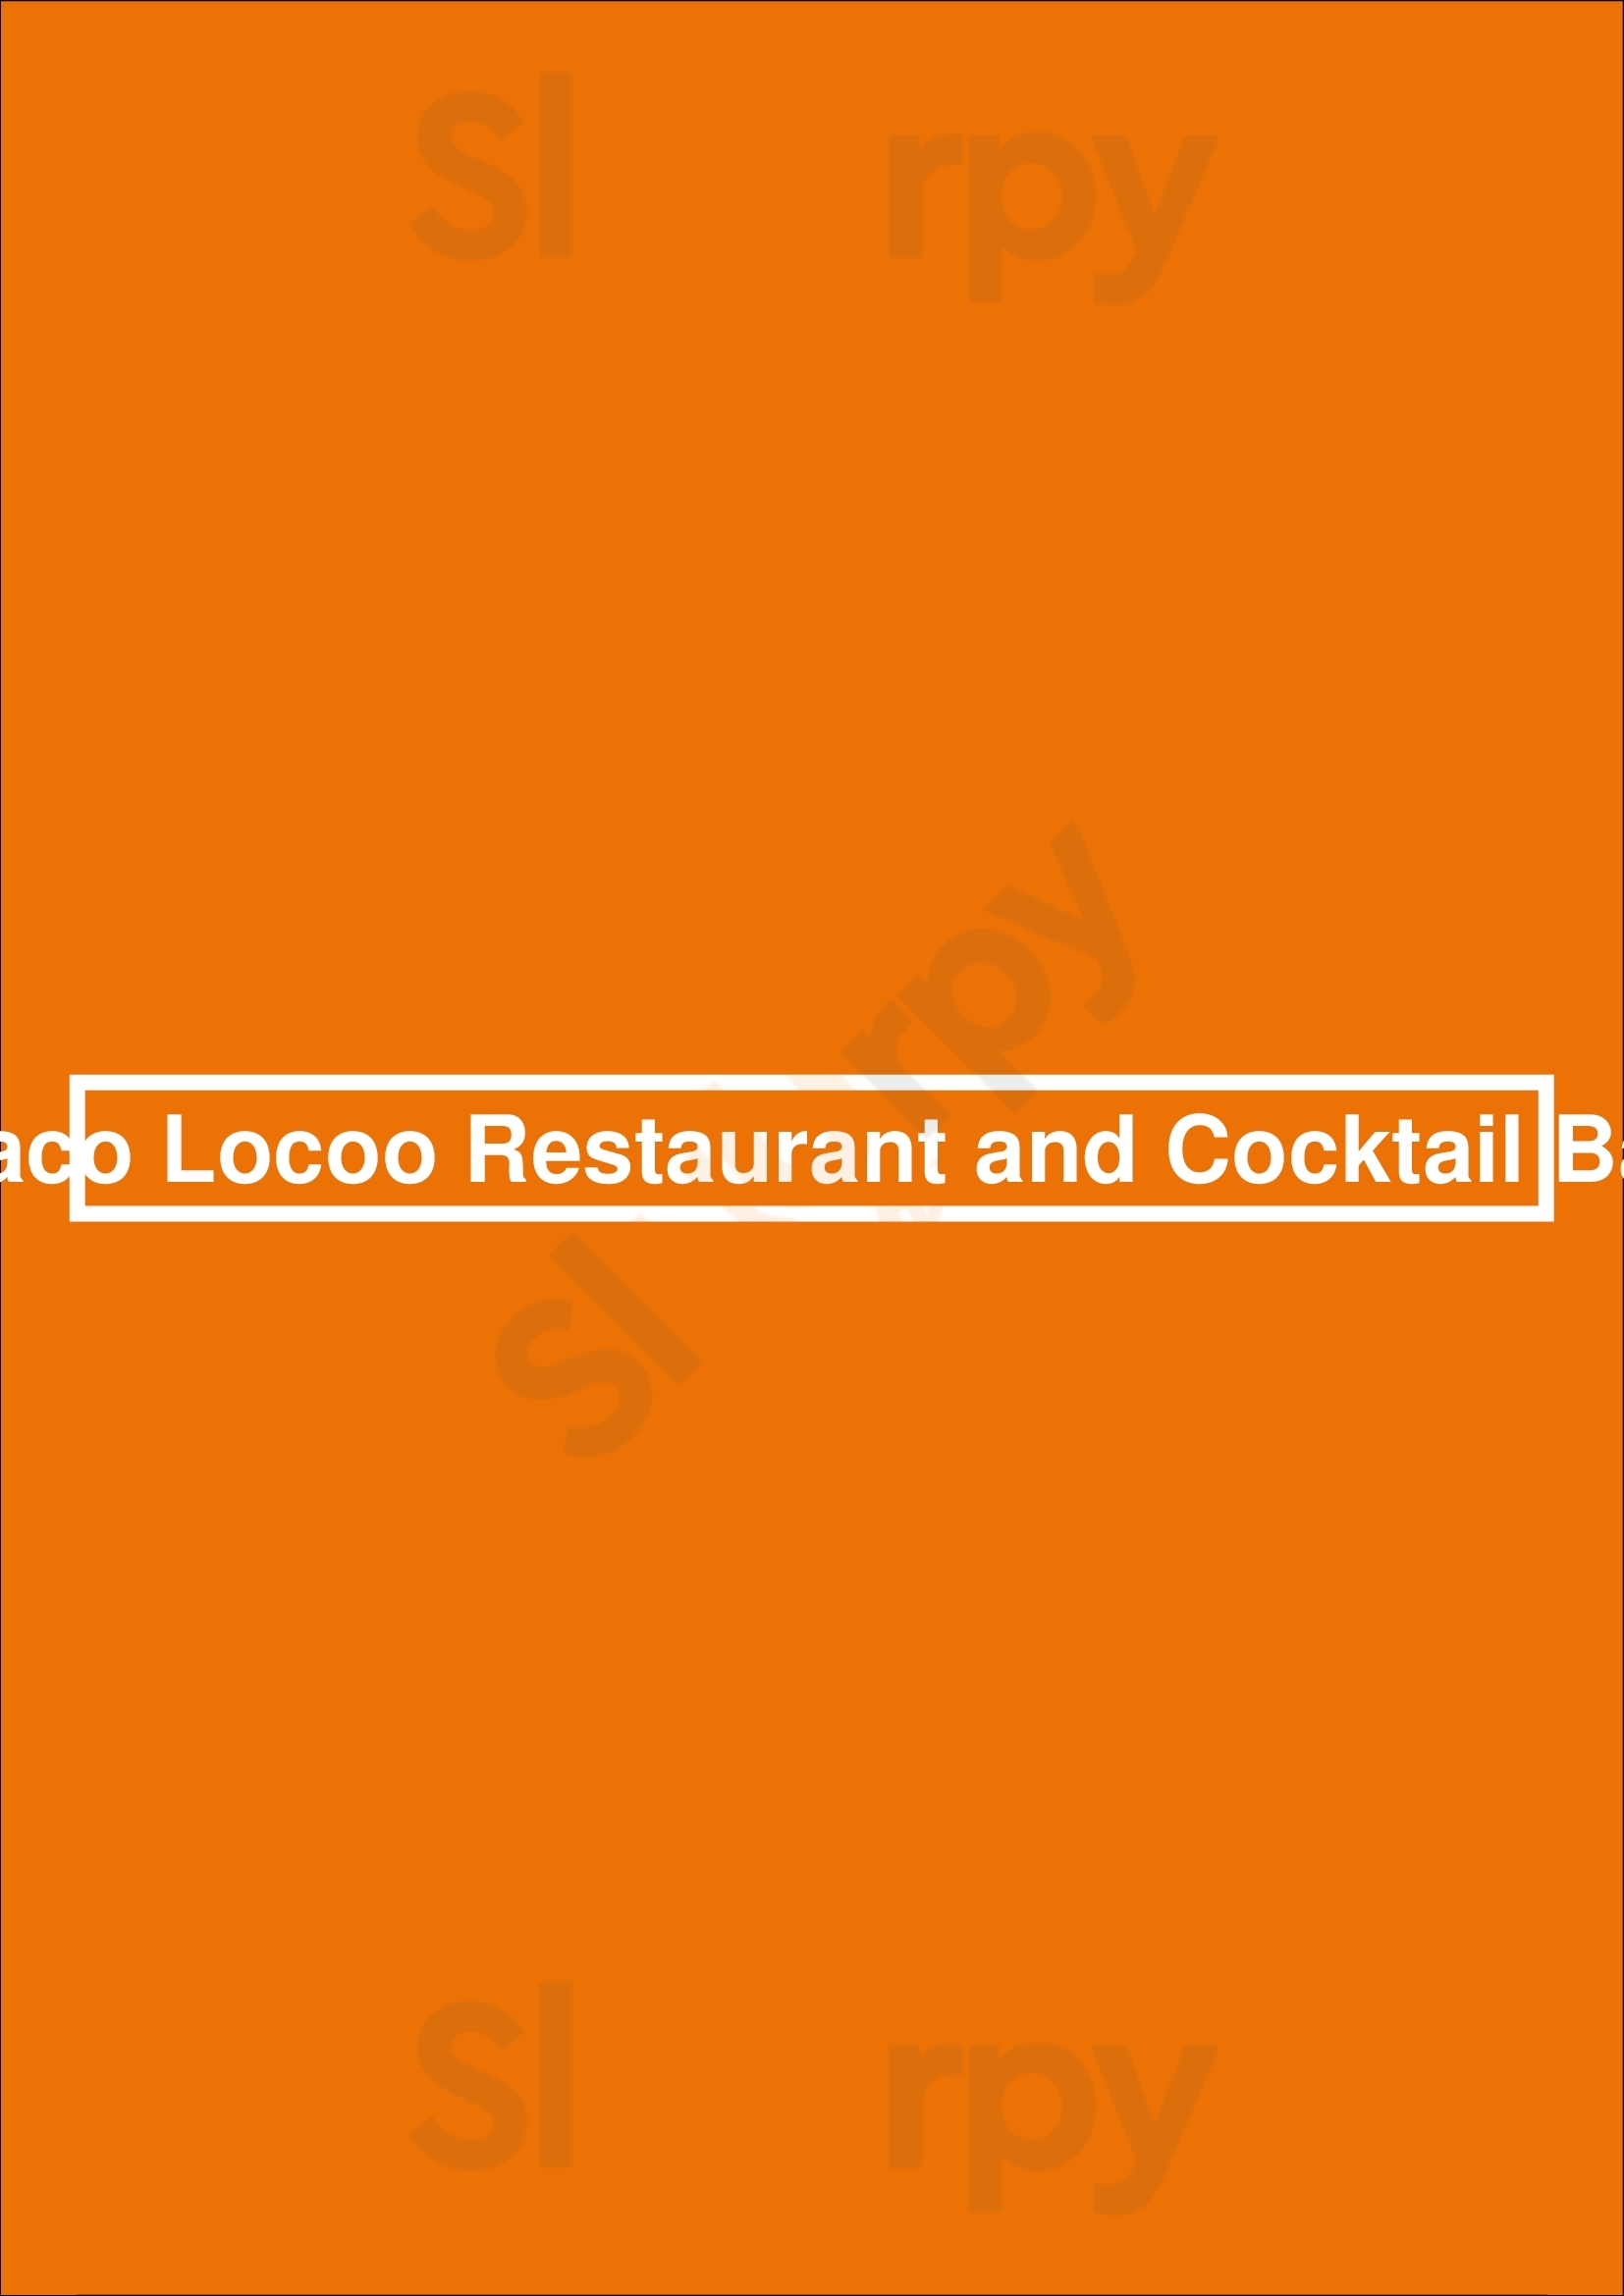 Taco Locoo Restaurant And Cocktail Bar Lisboa Menu - 1